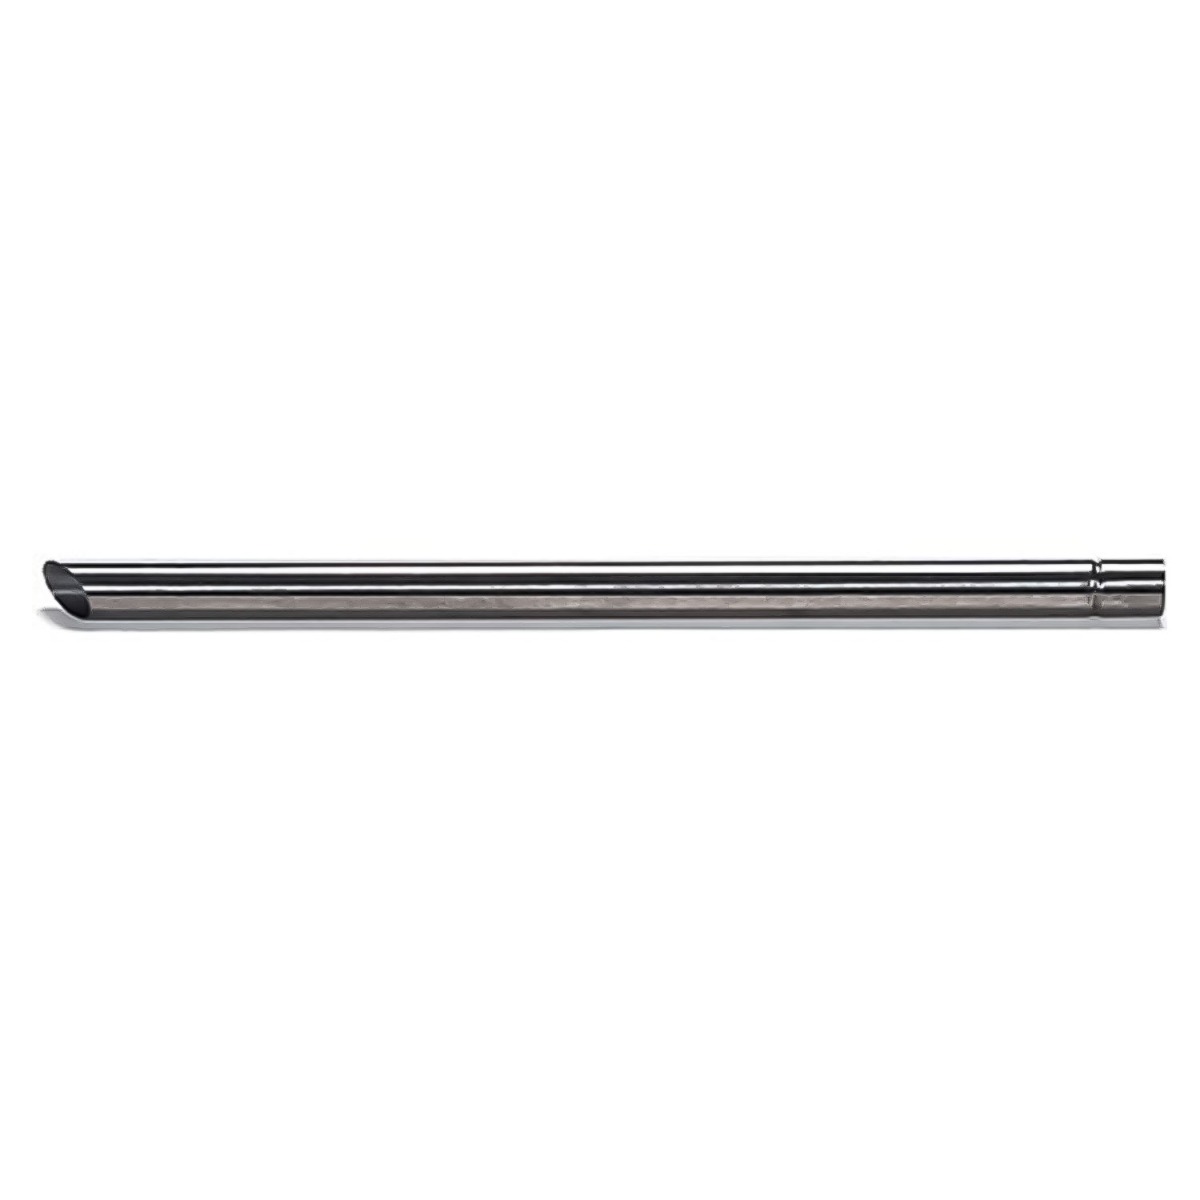 610mm Stainless Steel Gulper (32mm)